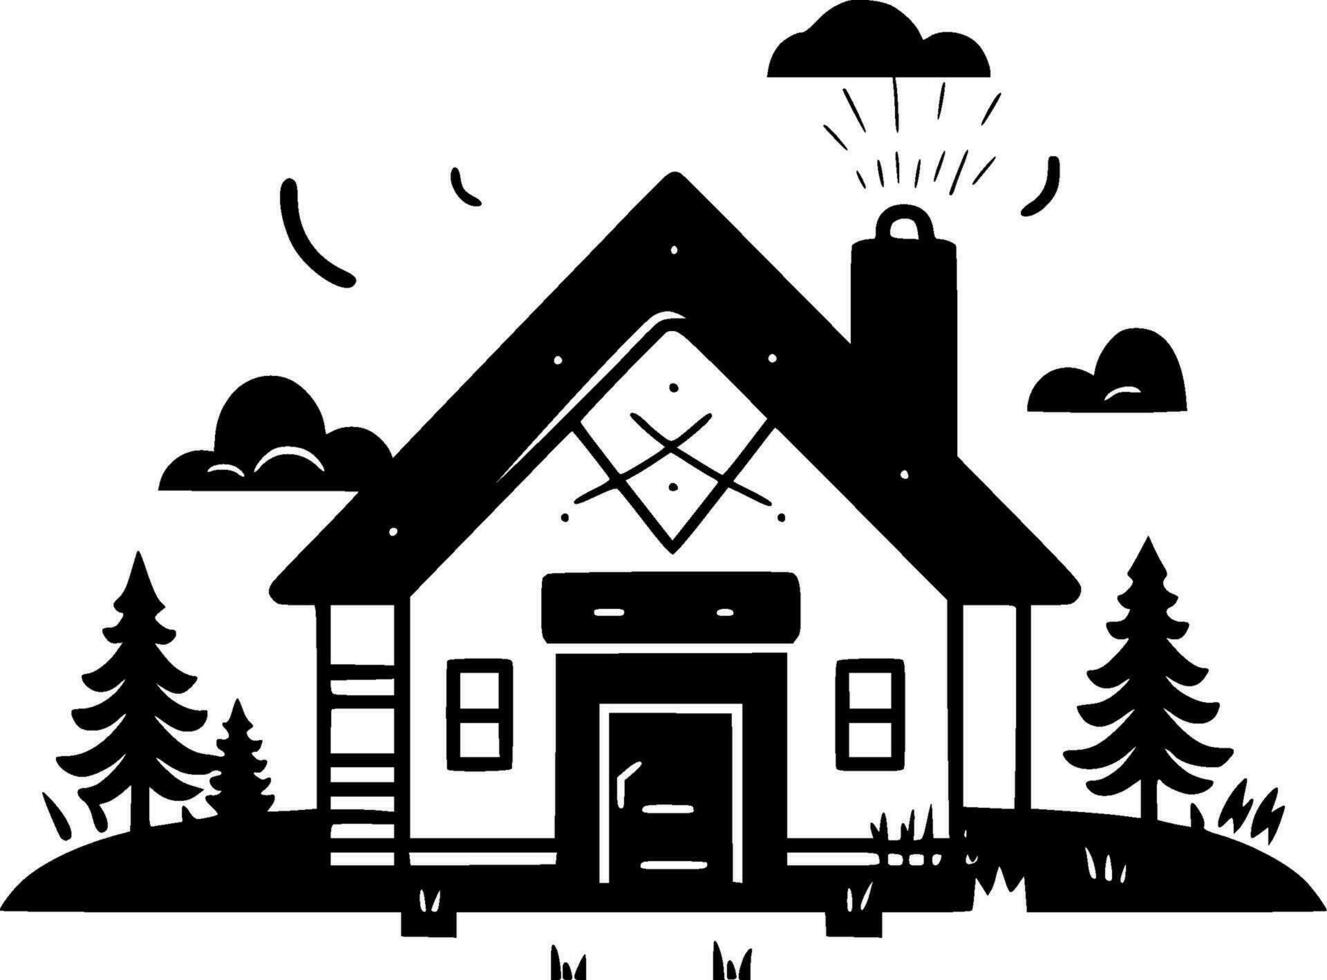 Bauernhaus - - hoch Qualität Vektor Logo - - Vektor Illustration Ideal zum T-Shirt Grafik